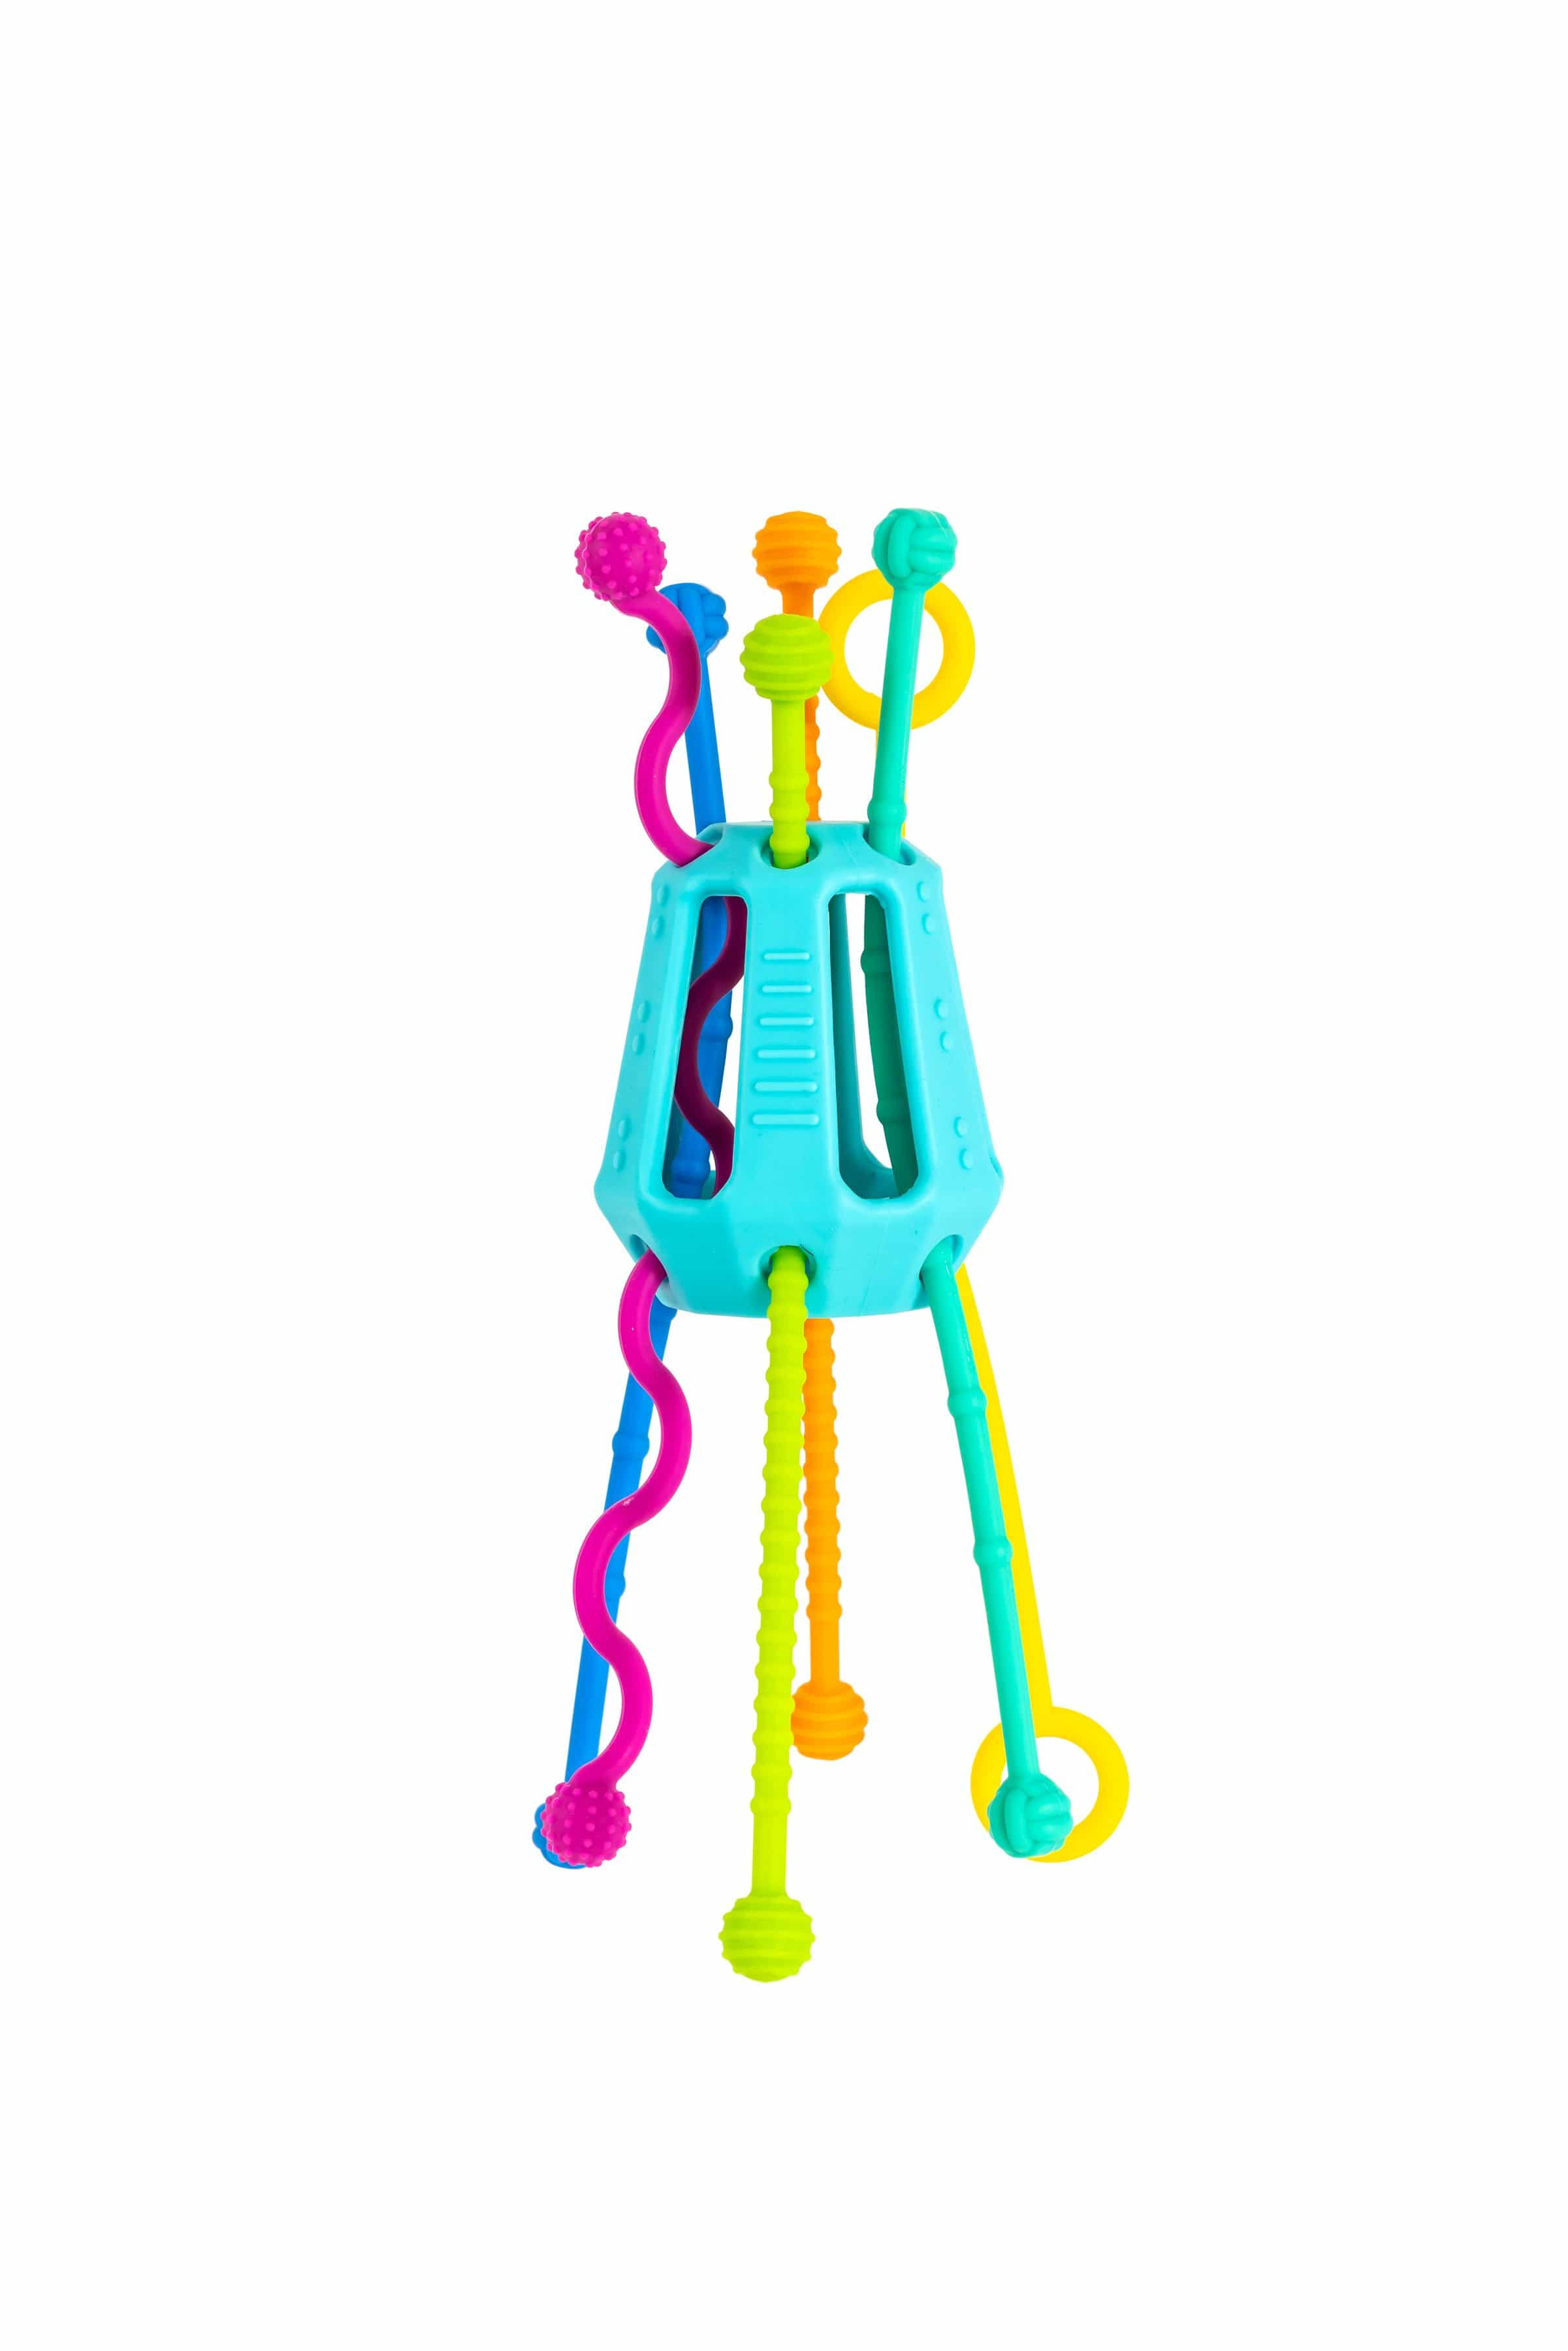 MOBI ZIPPEE Original Activity Toy for Toddlers' Sensory Development -